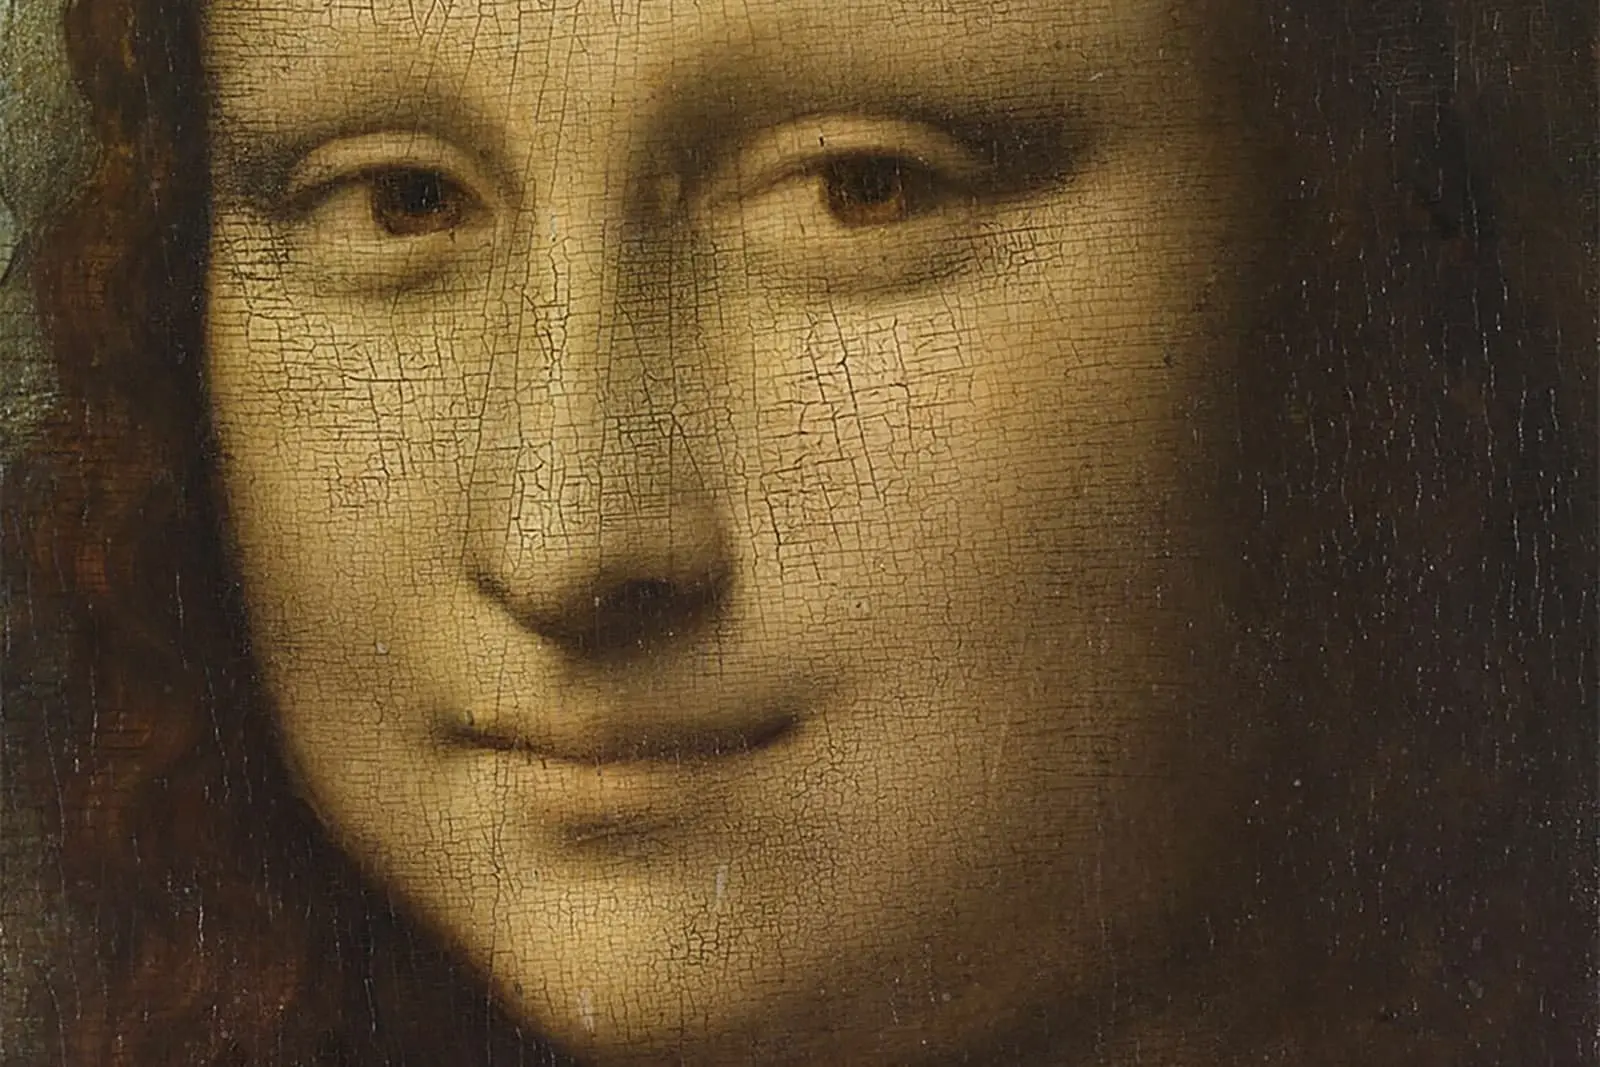 Mona Lisa by Leonardo da Vinci, the story behind the fame